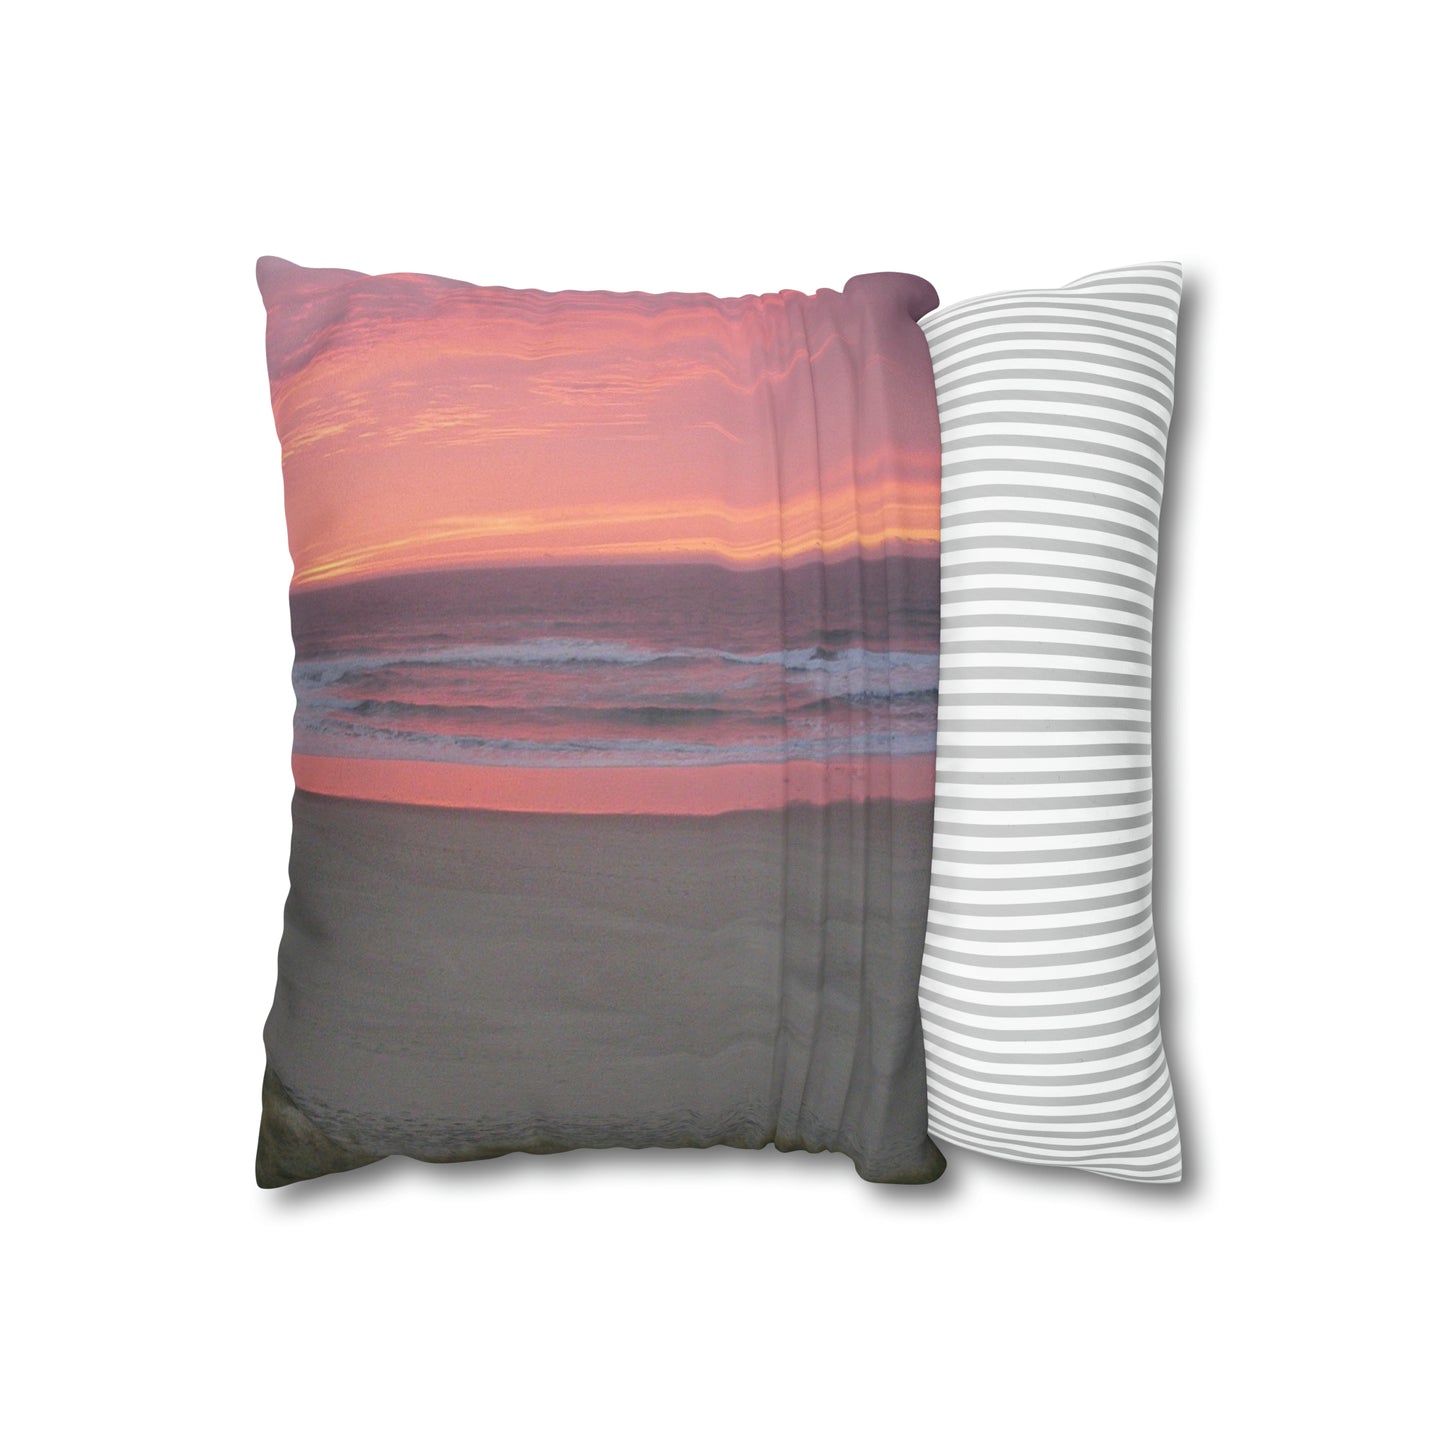 Pink Ocean Sunset Faux Suede Pillow Case